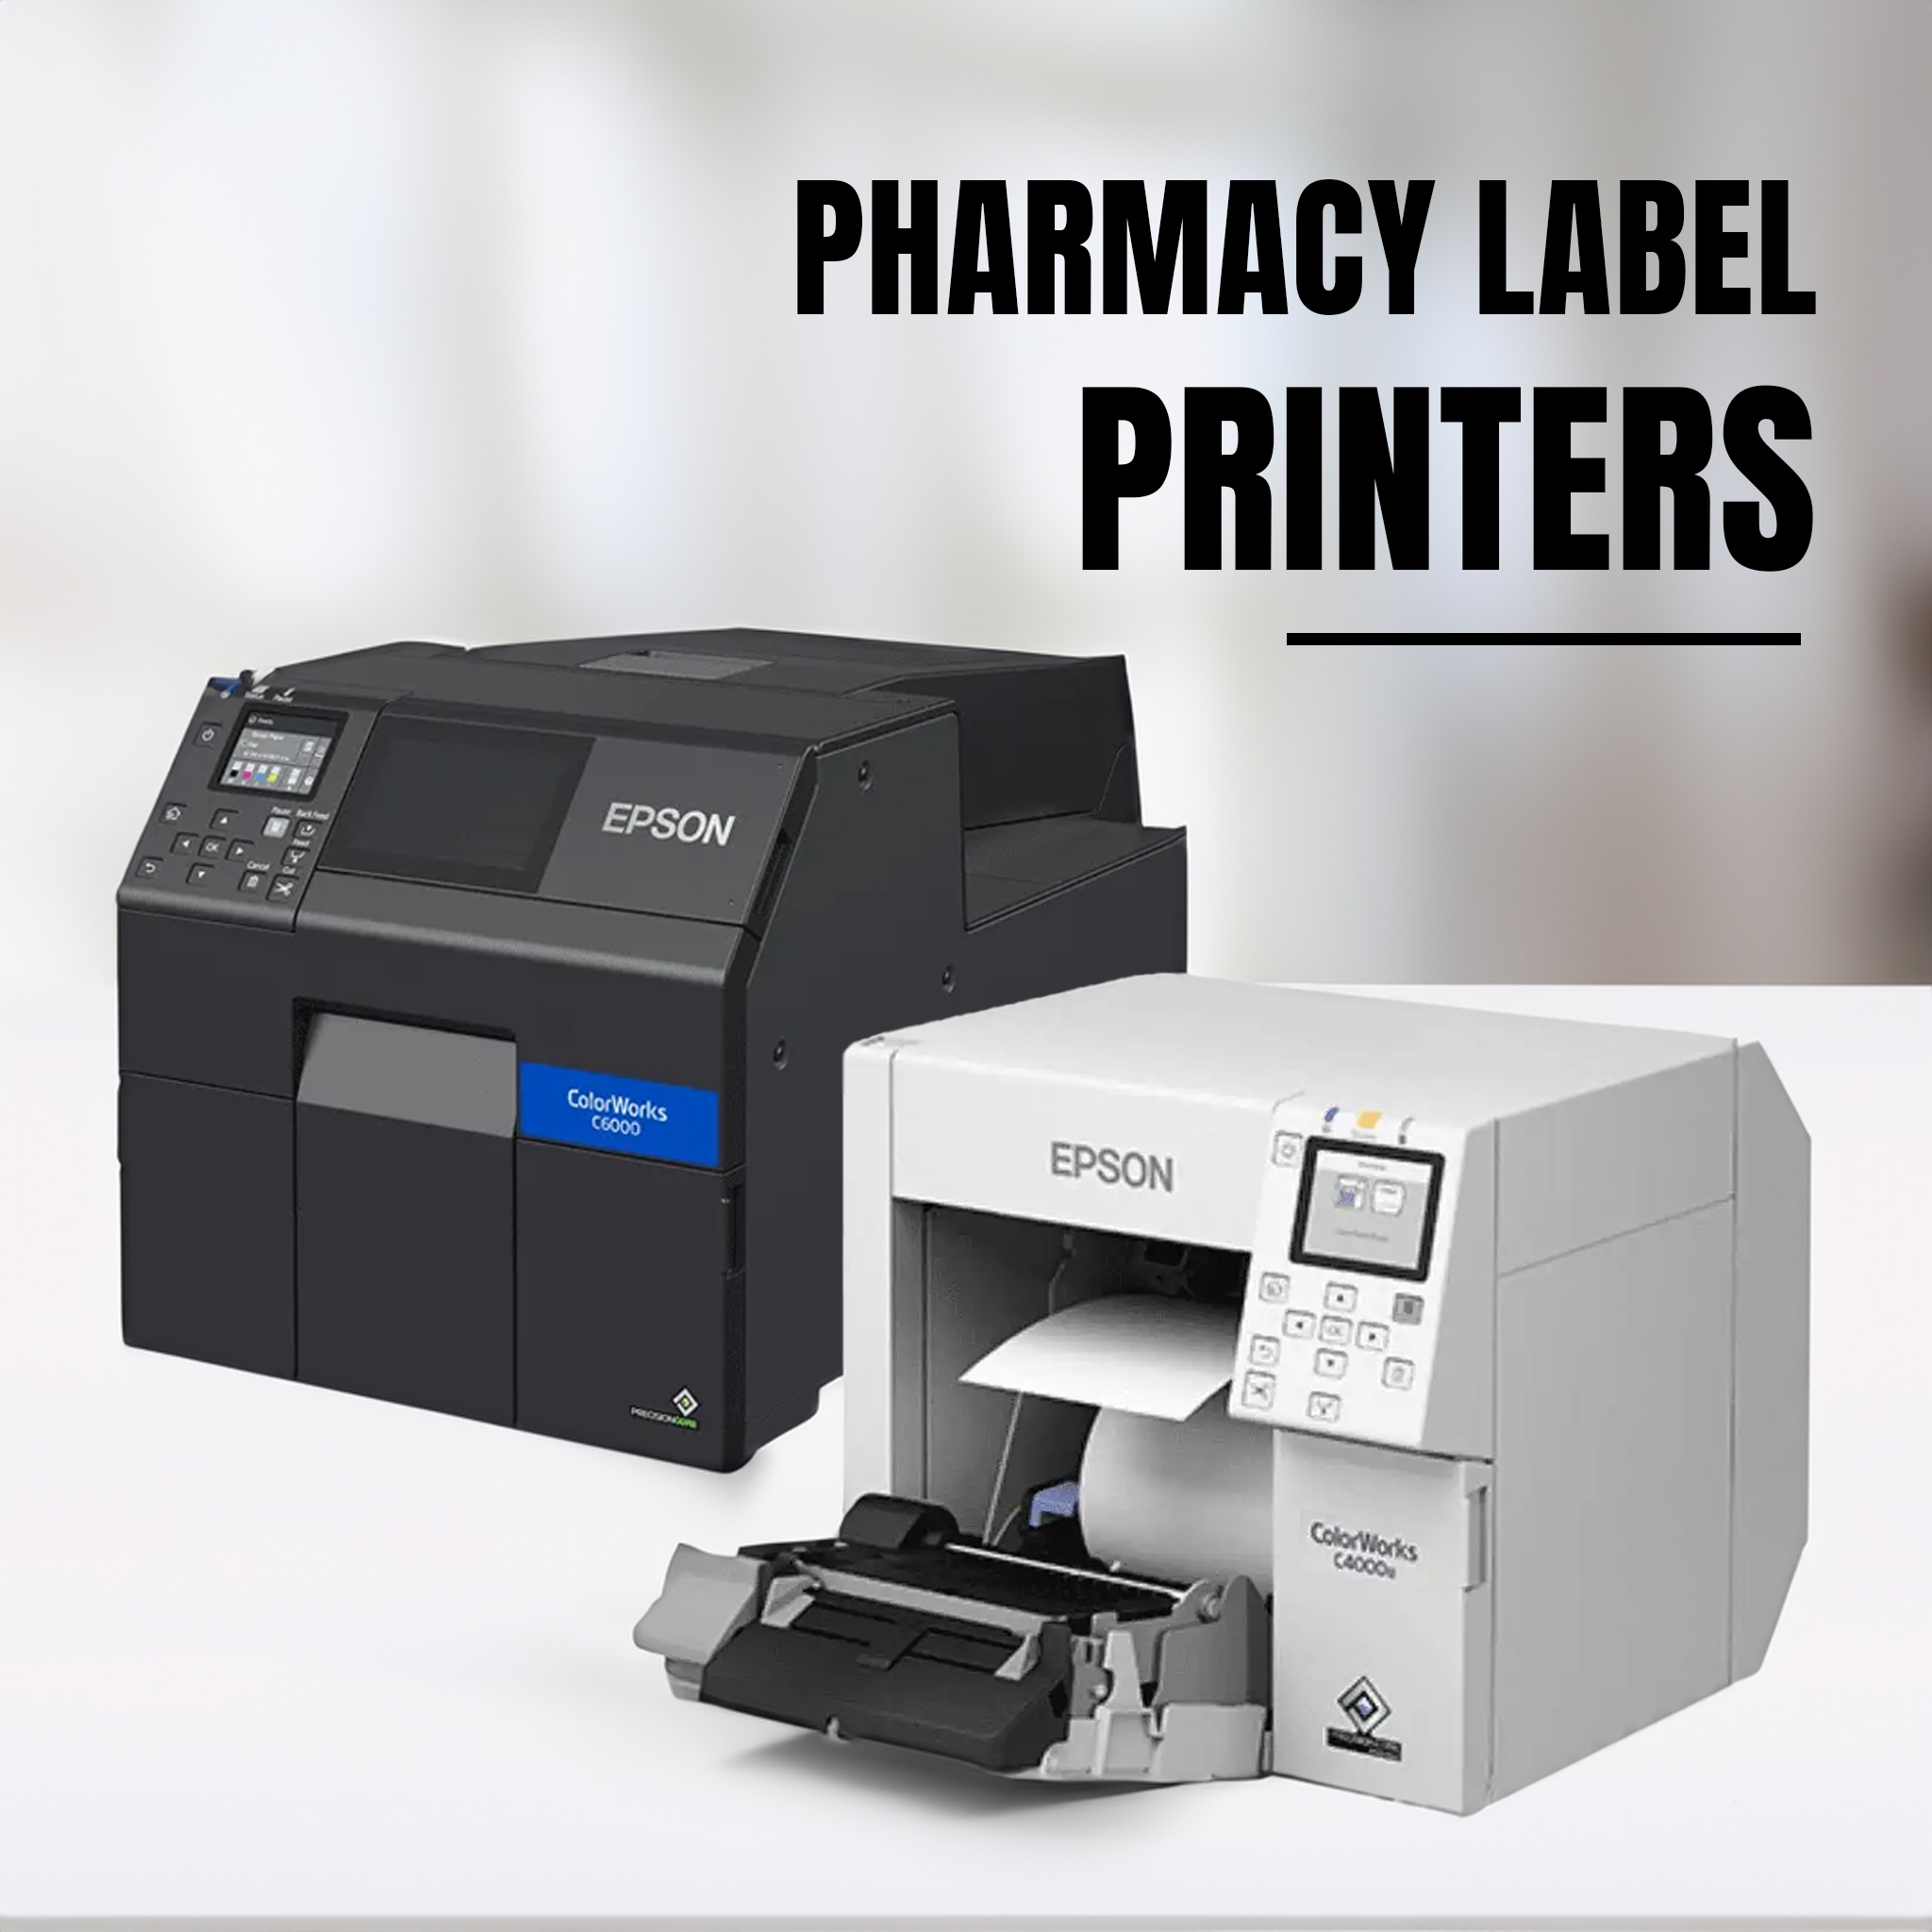 Pharmacy Label Printers banner